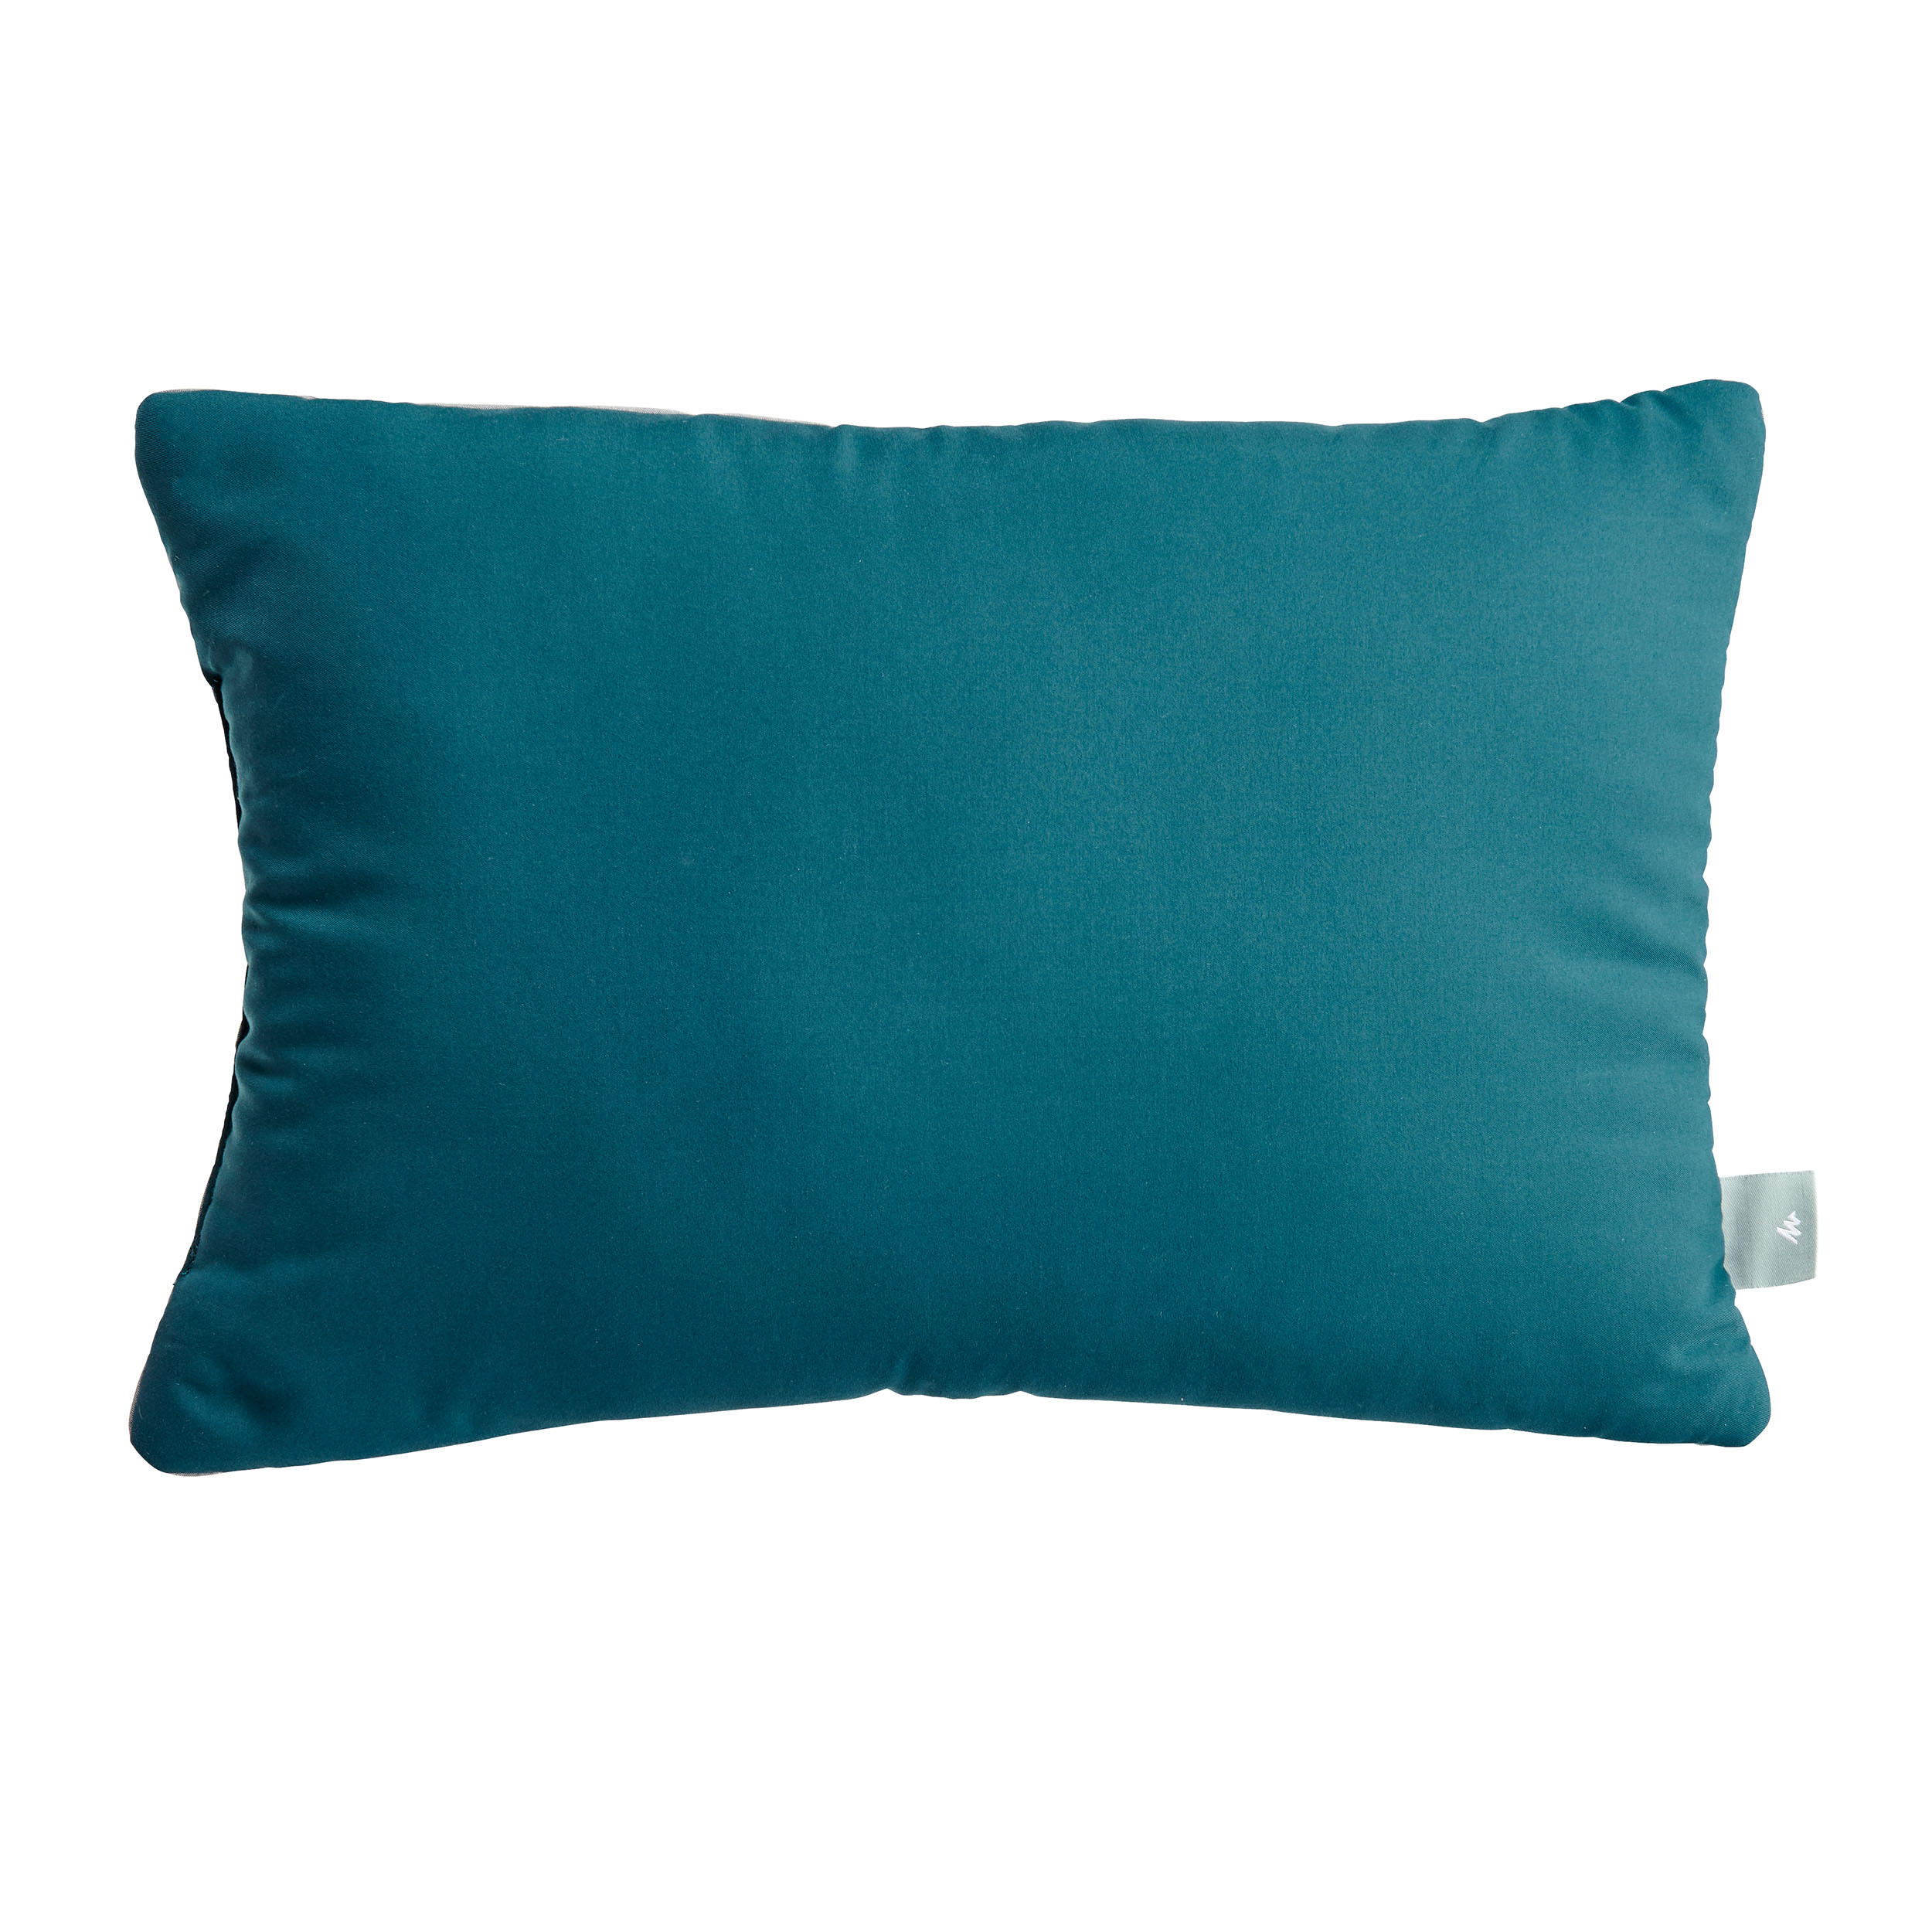 decathlon inflatable pillow